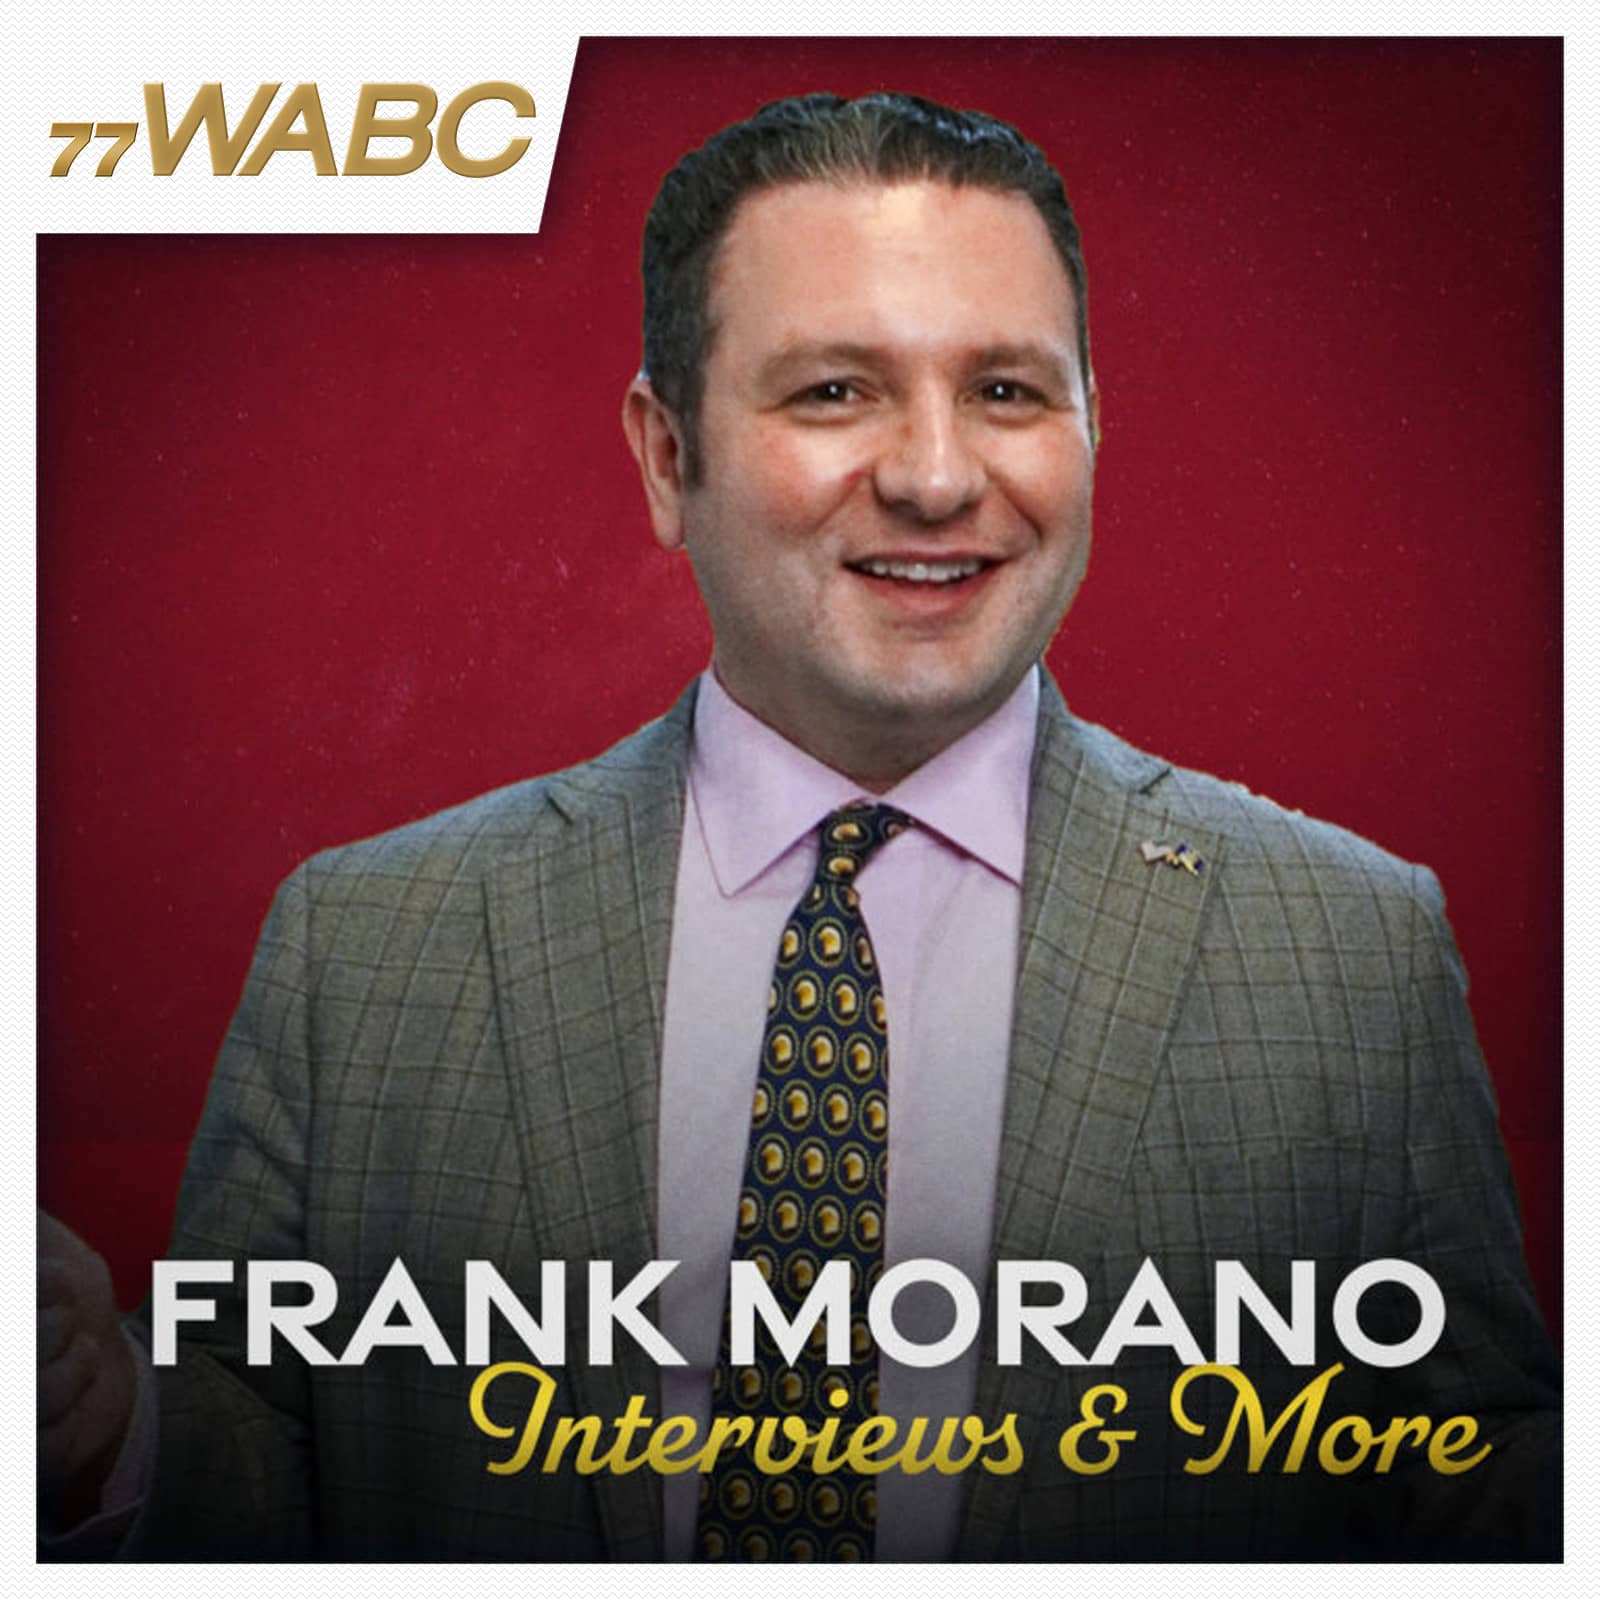 frank-morano-interviews-and-more-podcast-new-logo103401